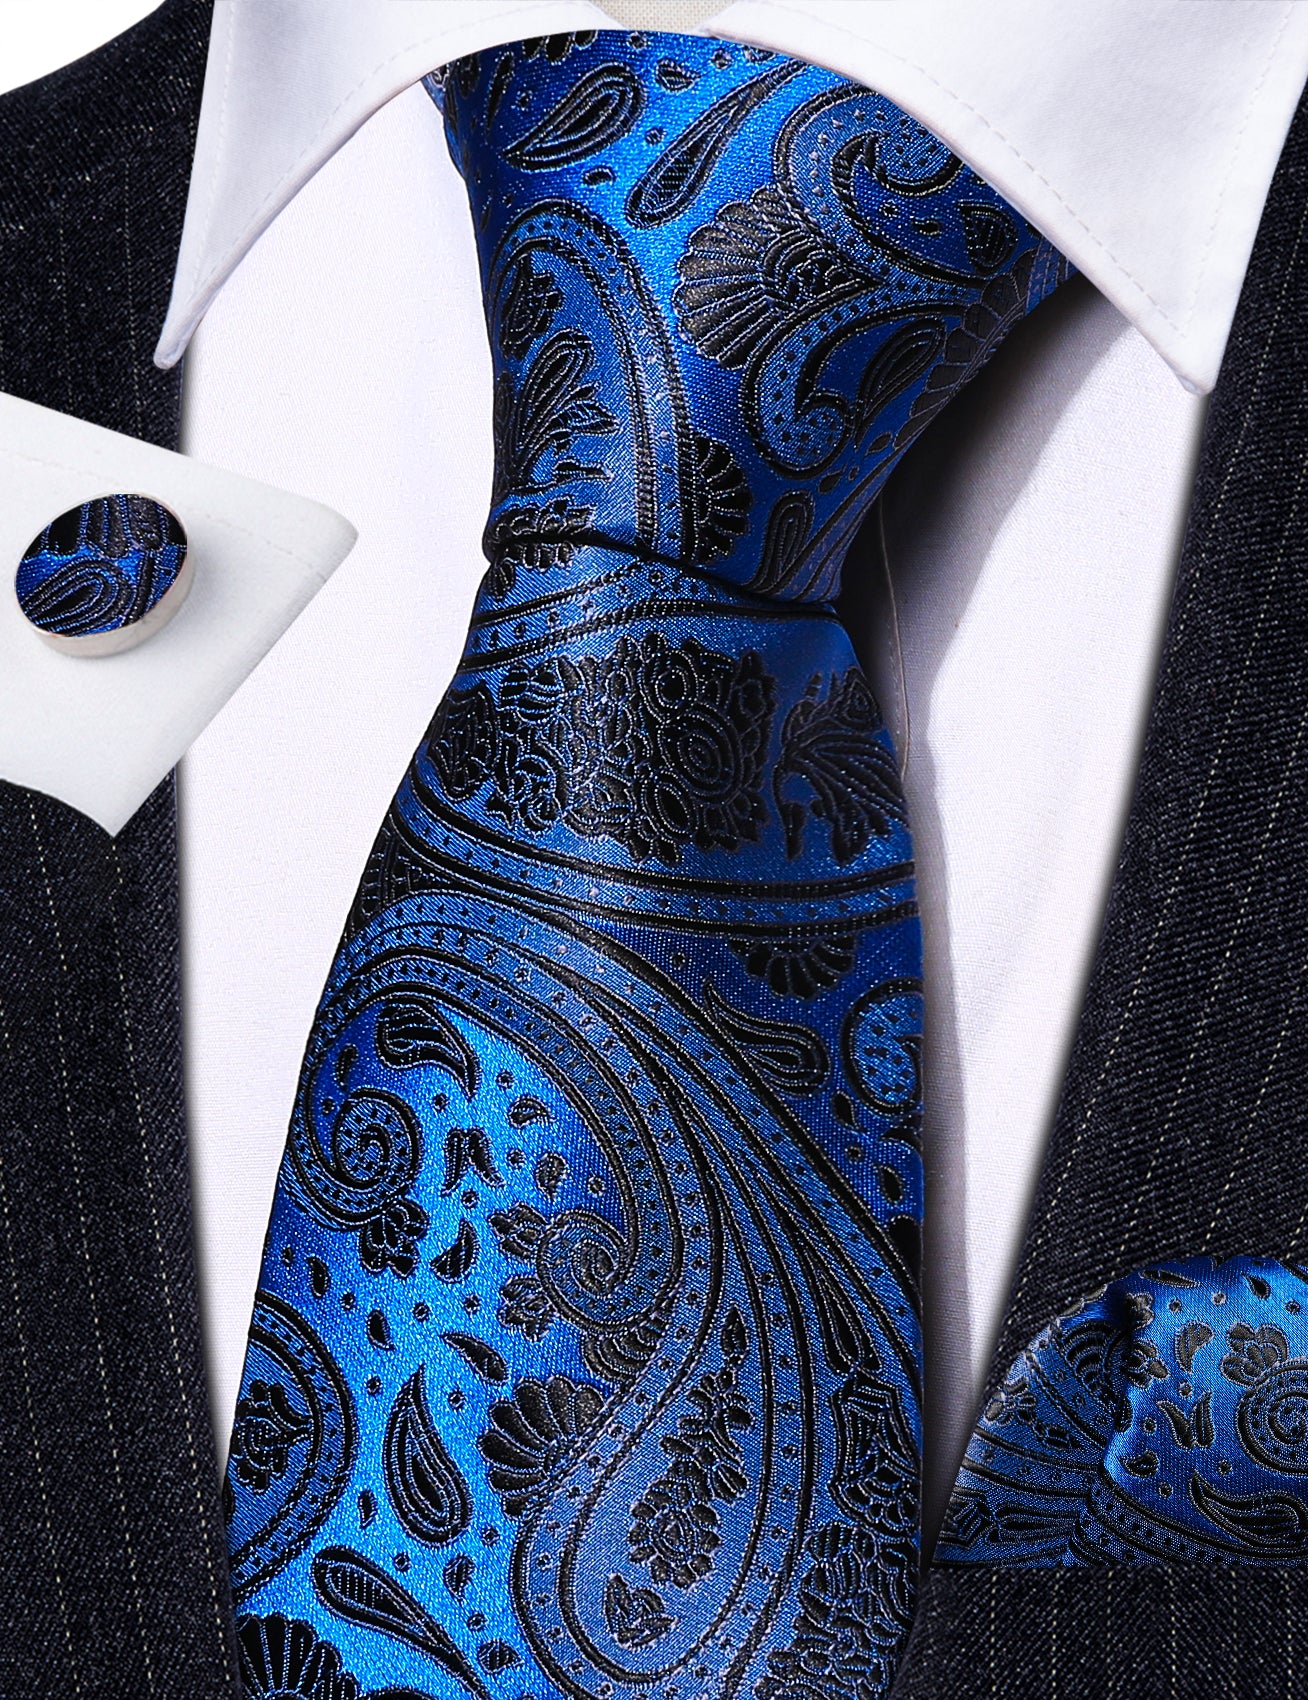 Barry.wang Blue Tie Black Silk Paisley Tie Hanky Cufflinks Set for Men